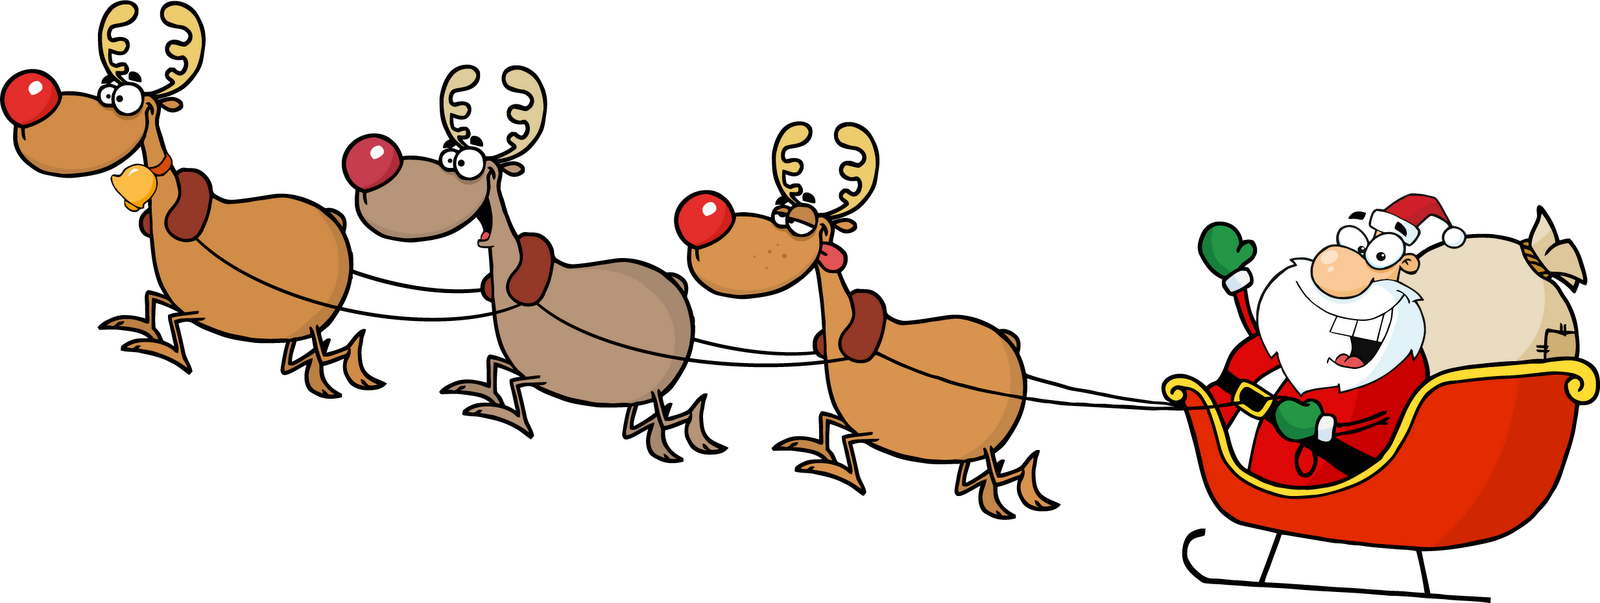 Santa png images free. Clipart reindeer sleigh